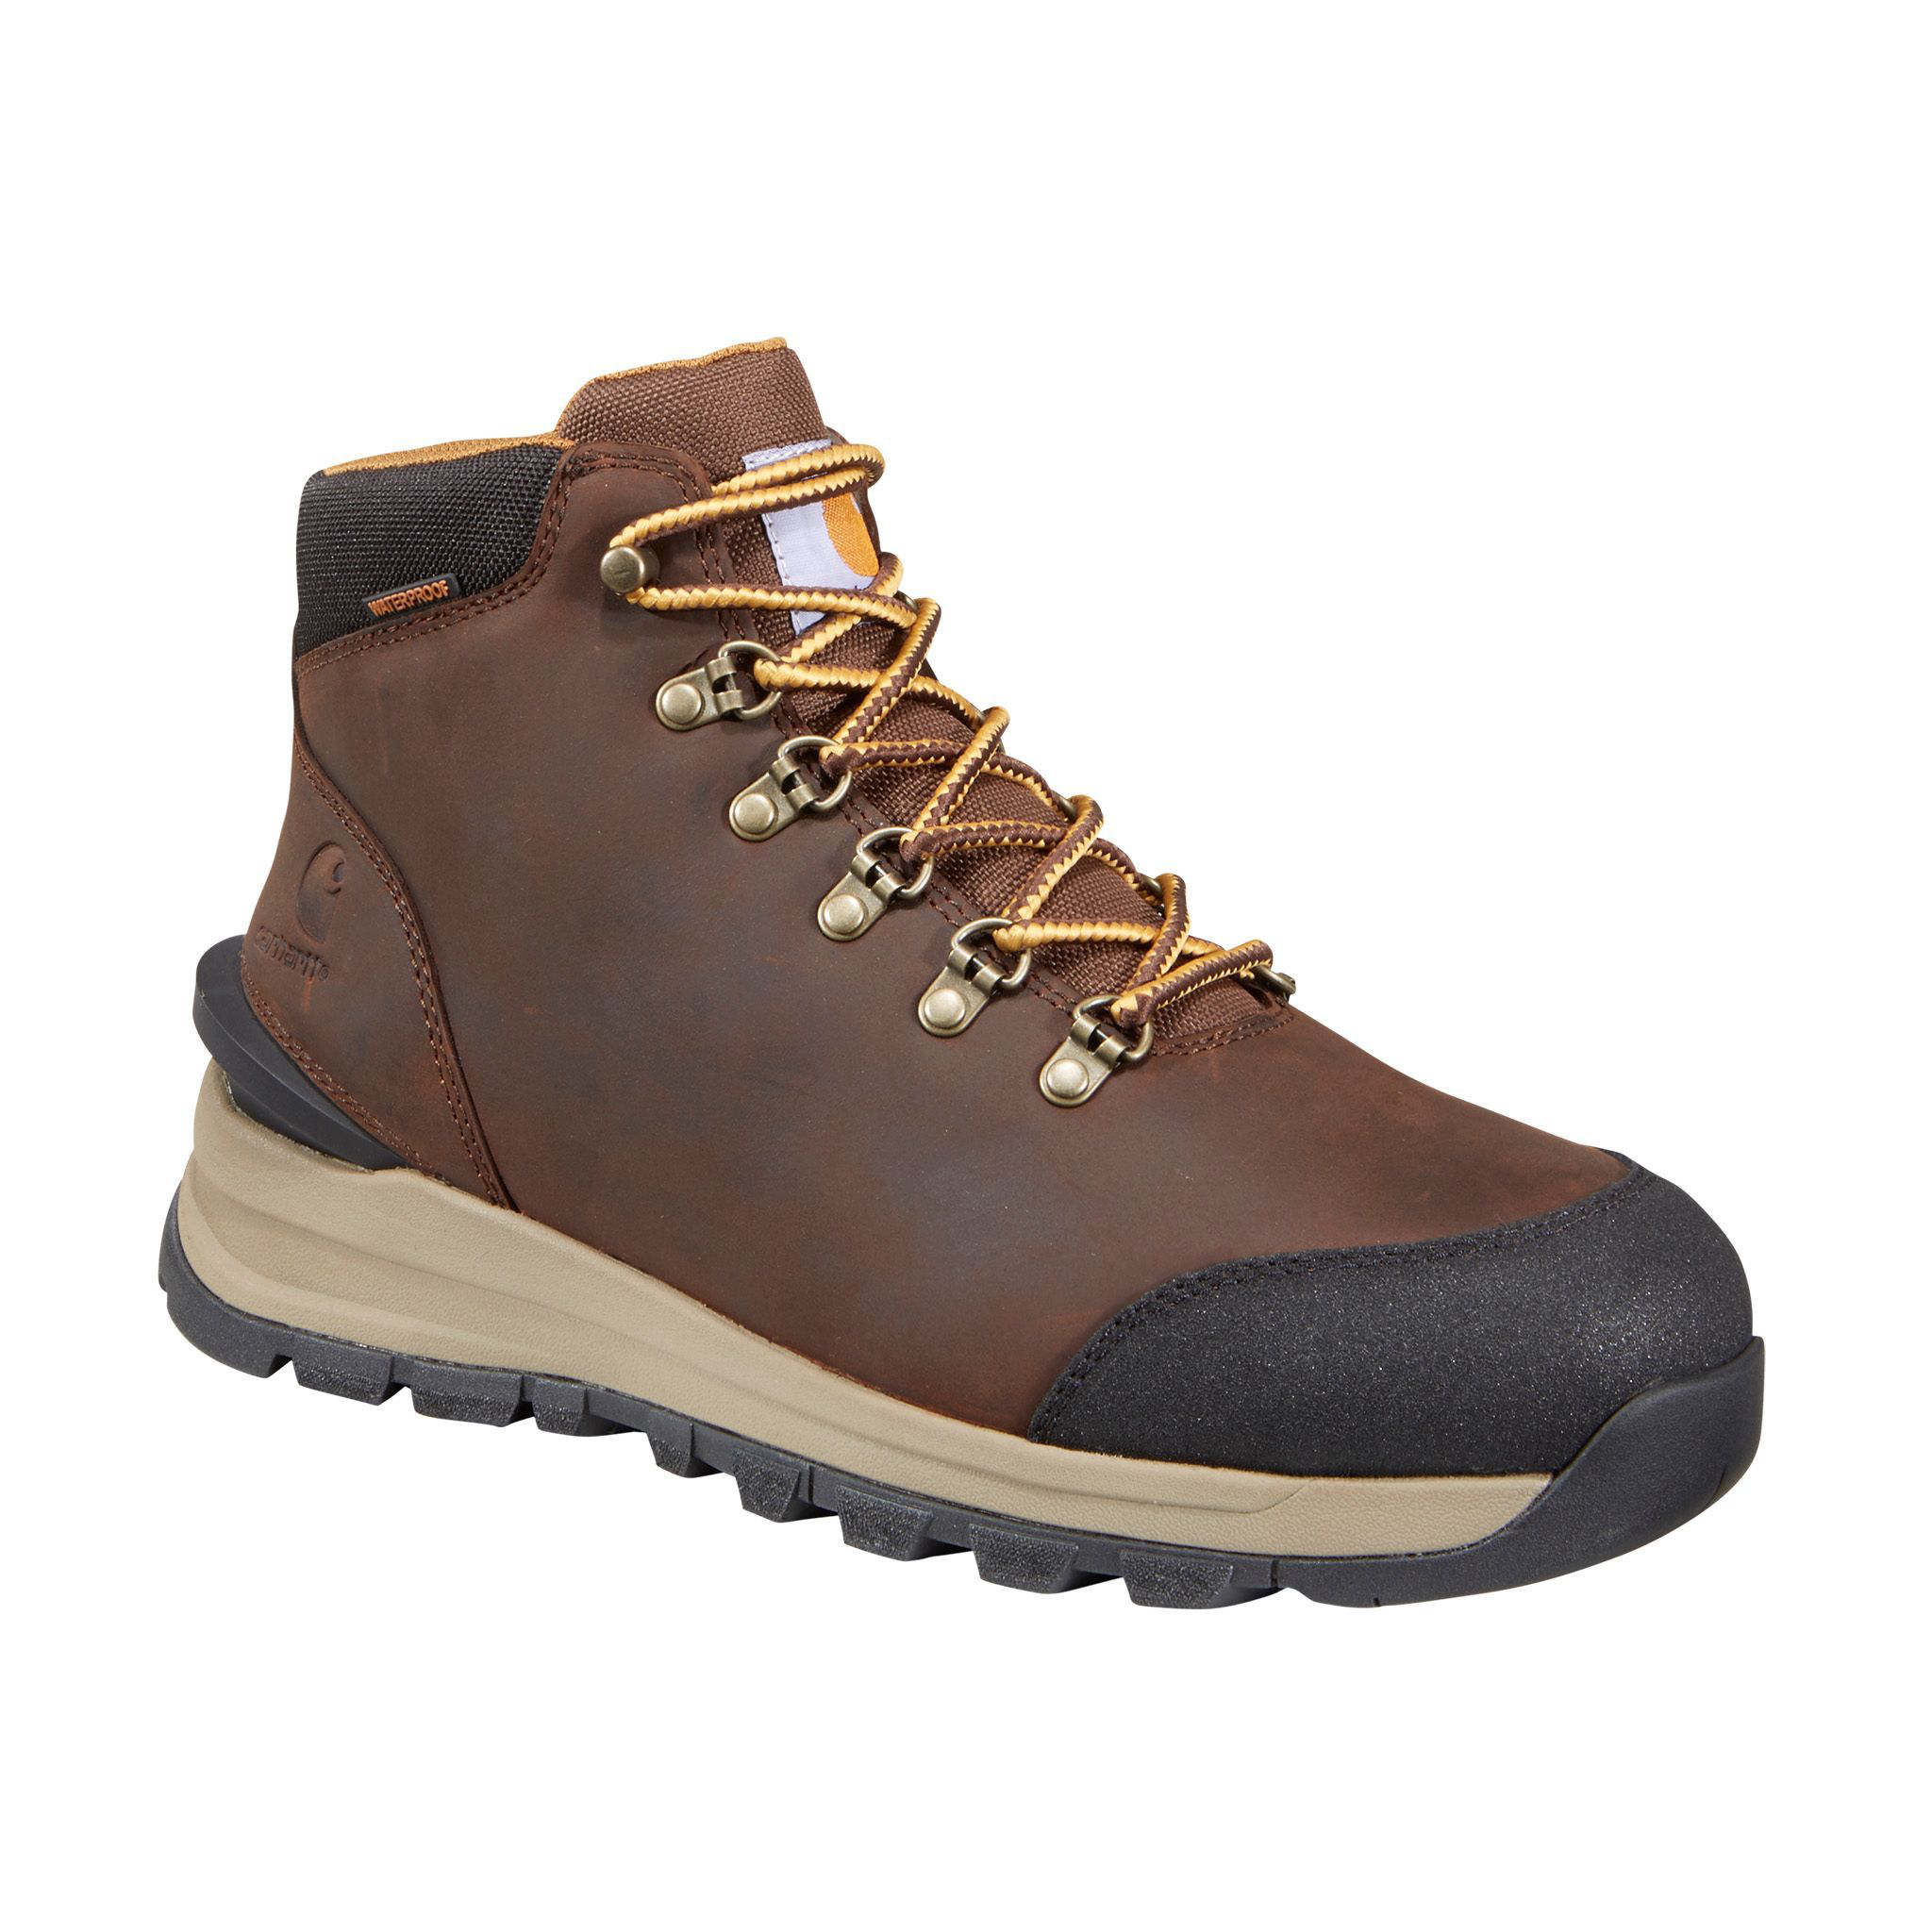 Carhartt Gilmore Waterproof Hiking Boots for Men - Dark Brown Oil Tanned - 10.5W